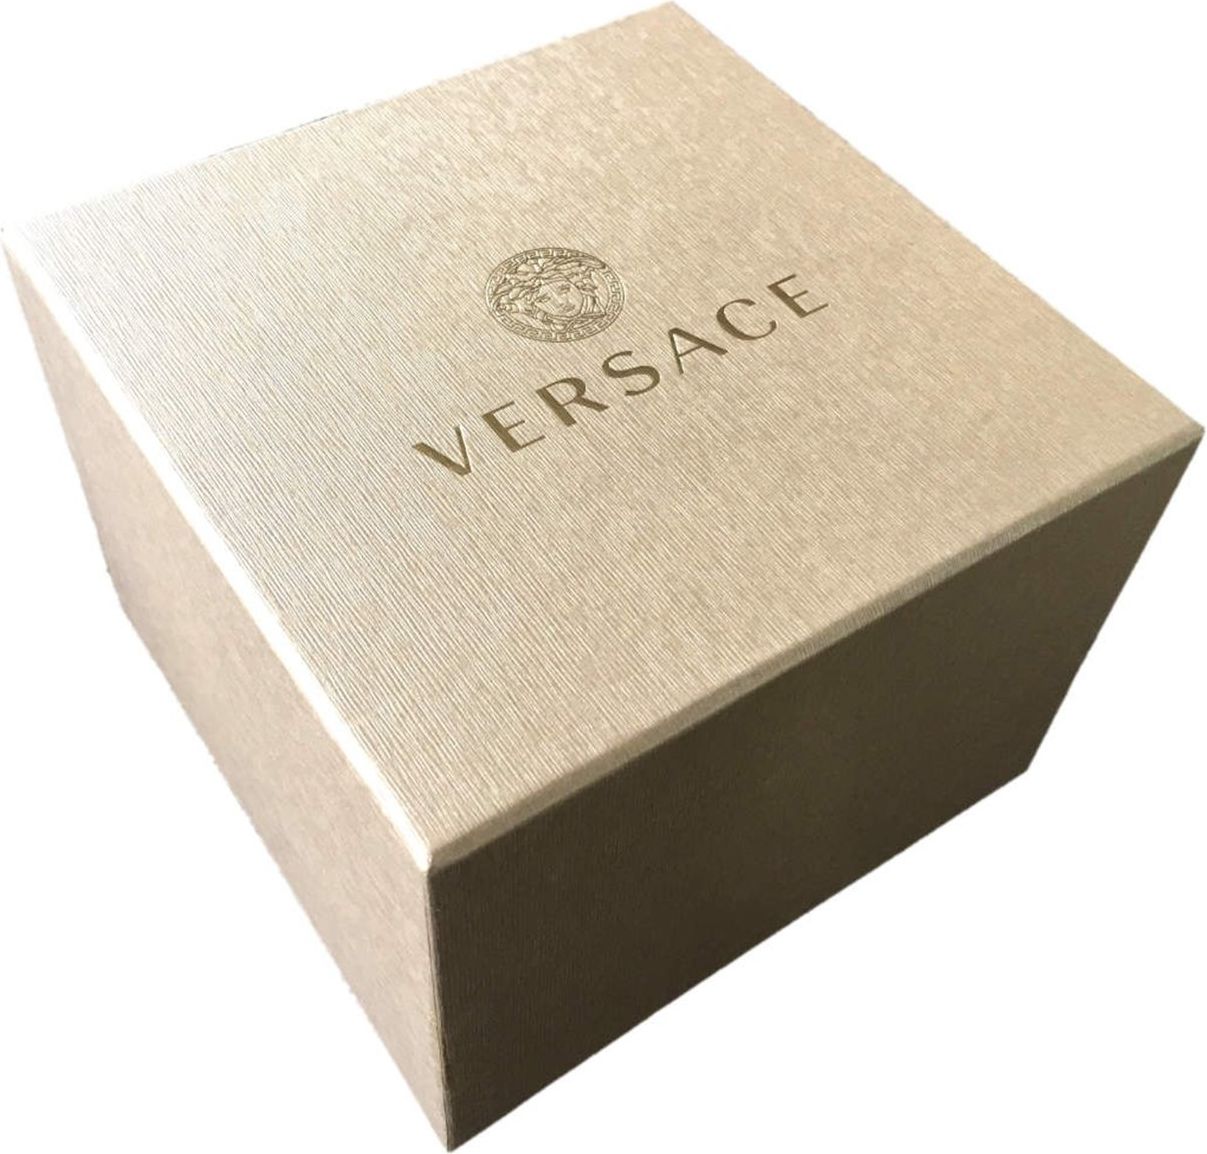 Versace VBP070017 V-Circle dames horloge 38 mm Wit